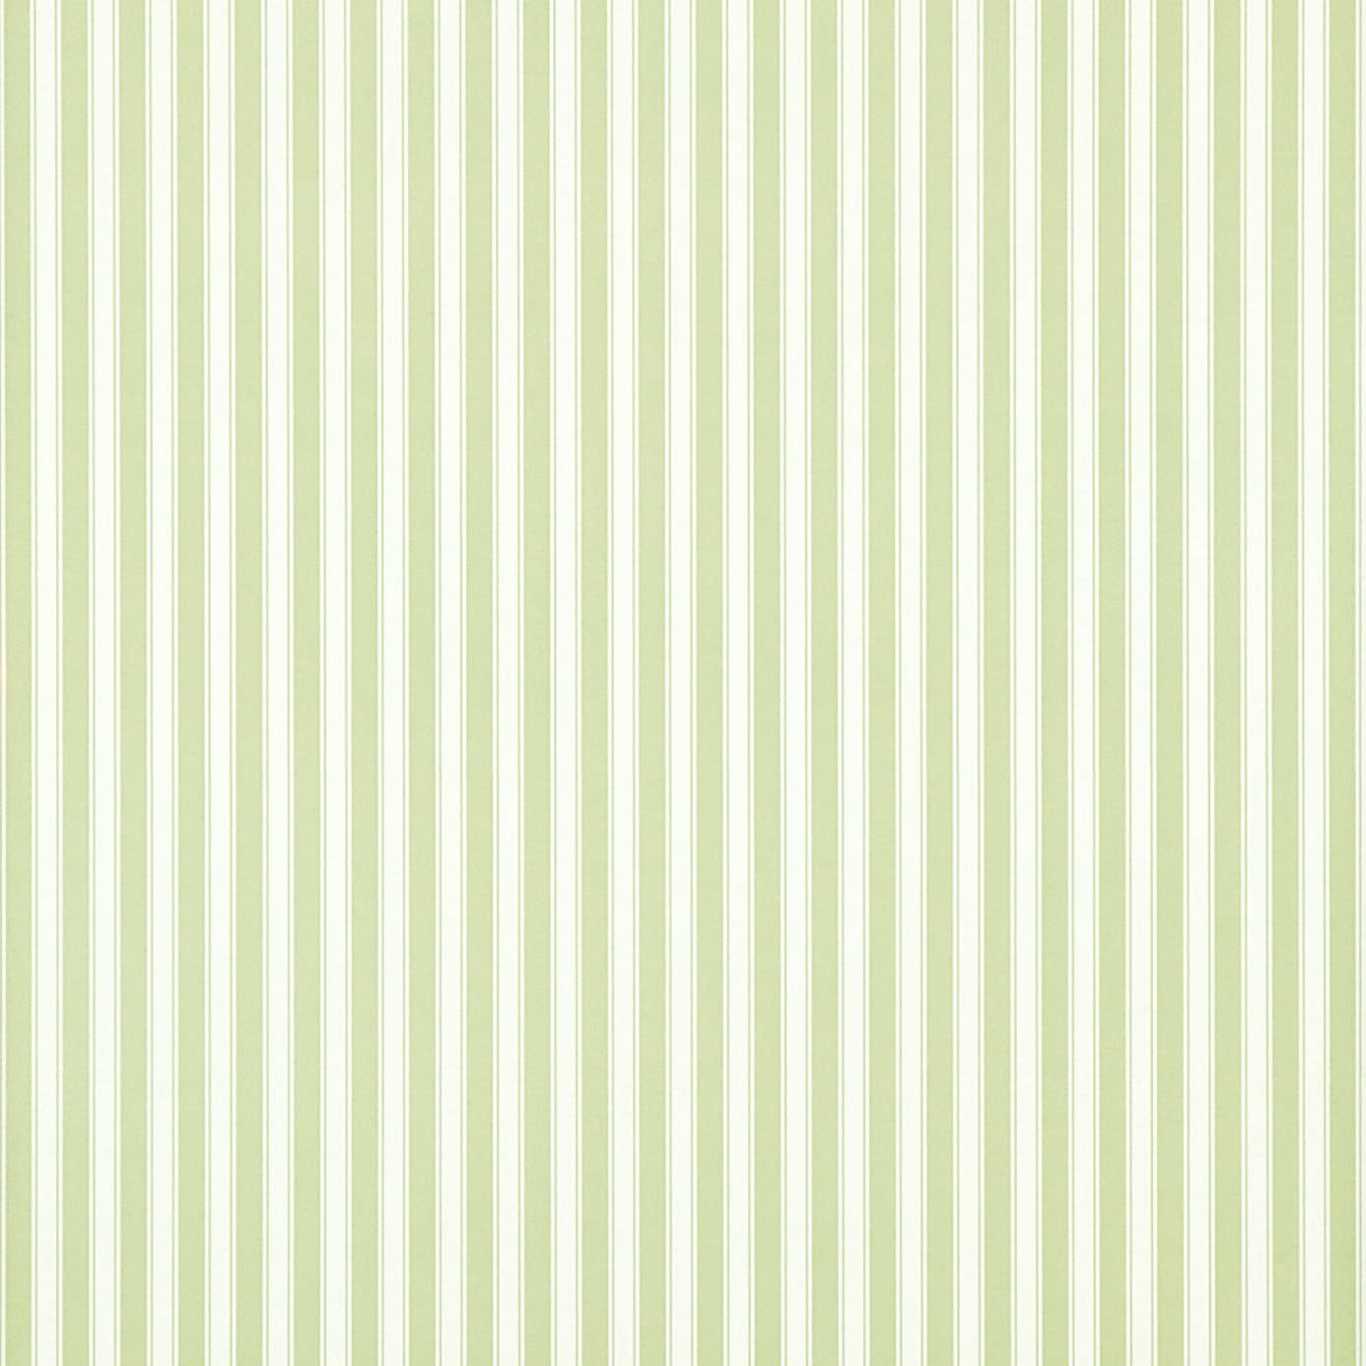 New Tiger Stripe Leaf GreenIvory Wallpaper Sanderson by